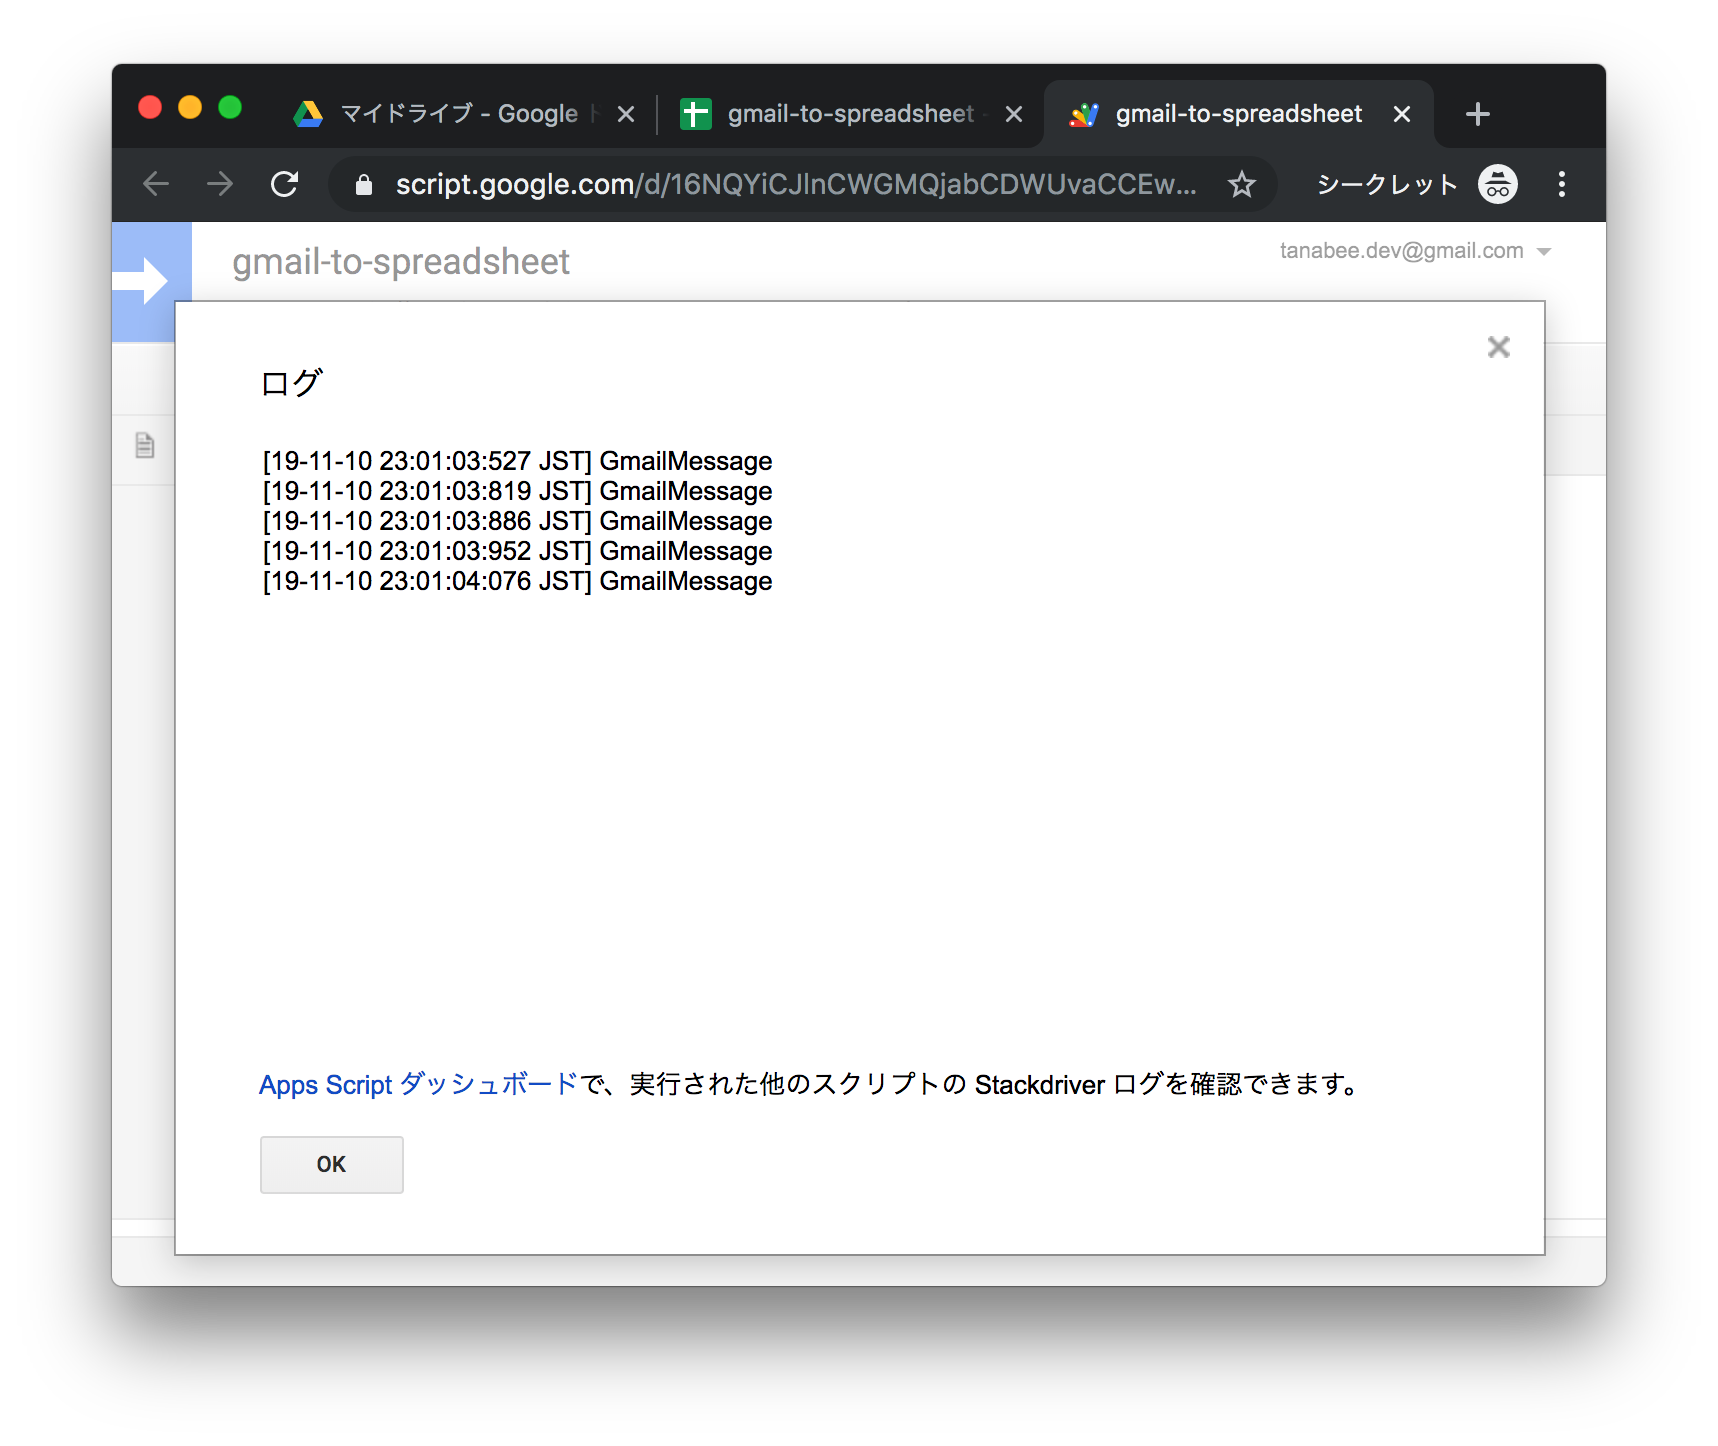 GmailMessage log